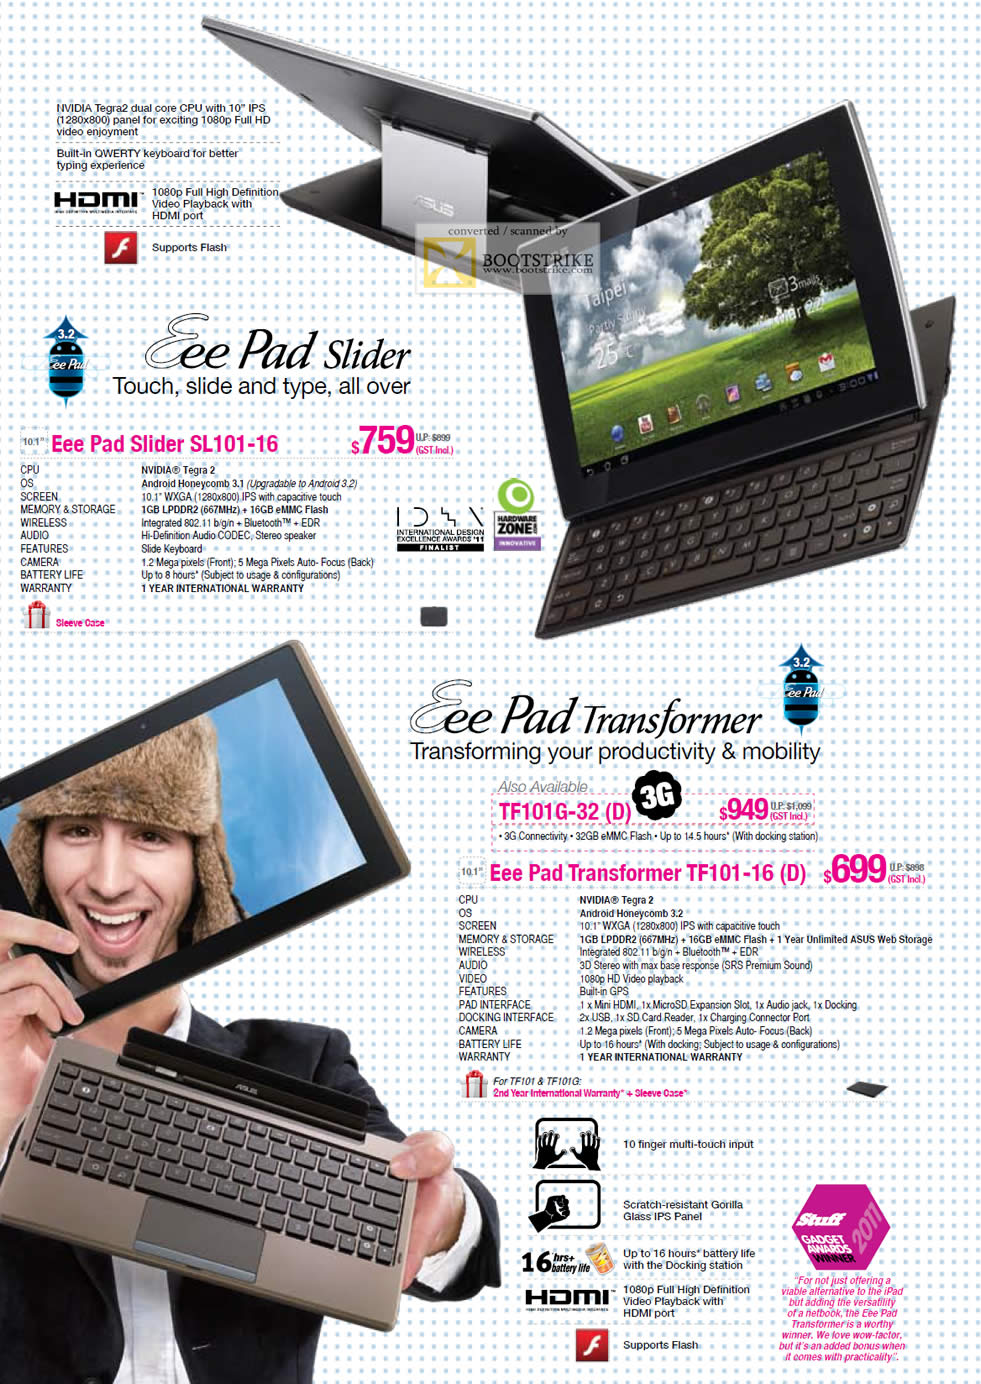 SITEX 2011 price list image brochure of ASUS Notebooks Tablets Eee Pad Slider SL101-16, Eee Pad Transformer TF101G-32 D, TF101G-16 D